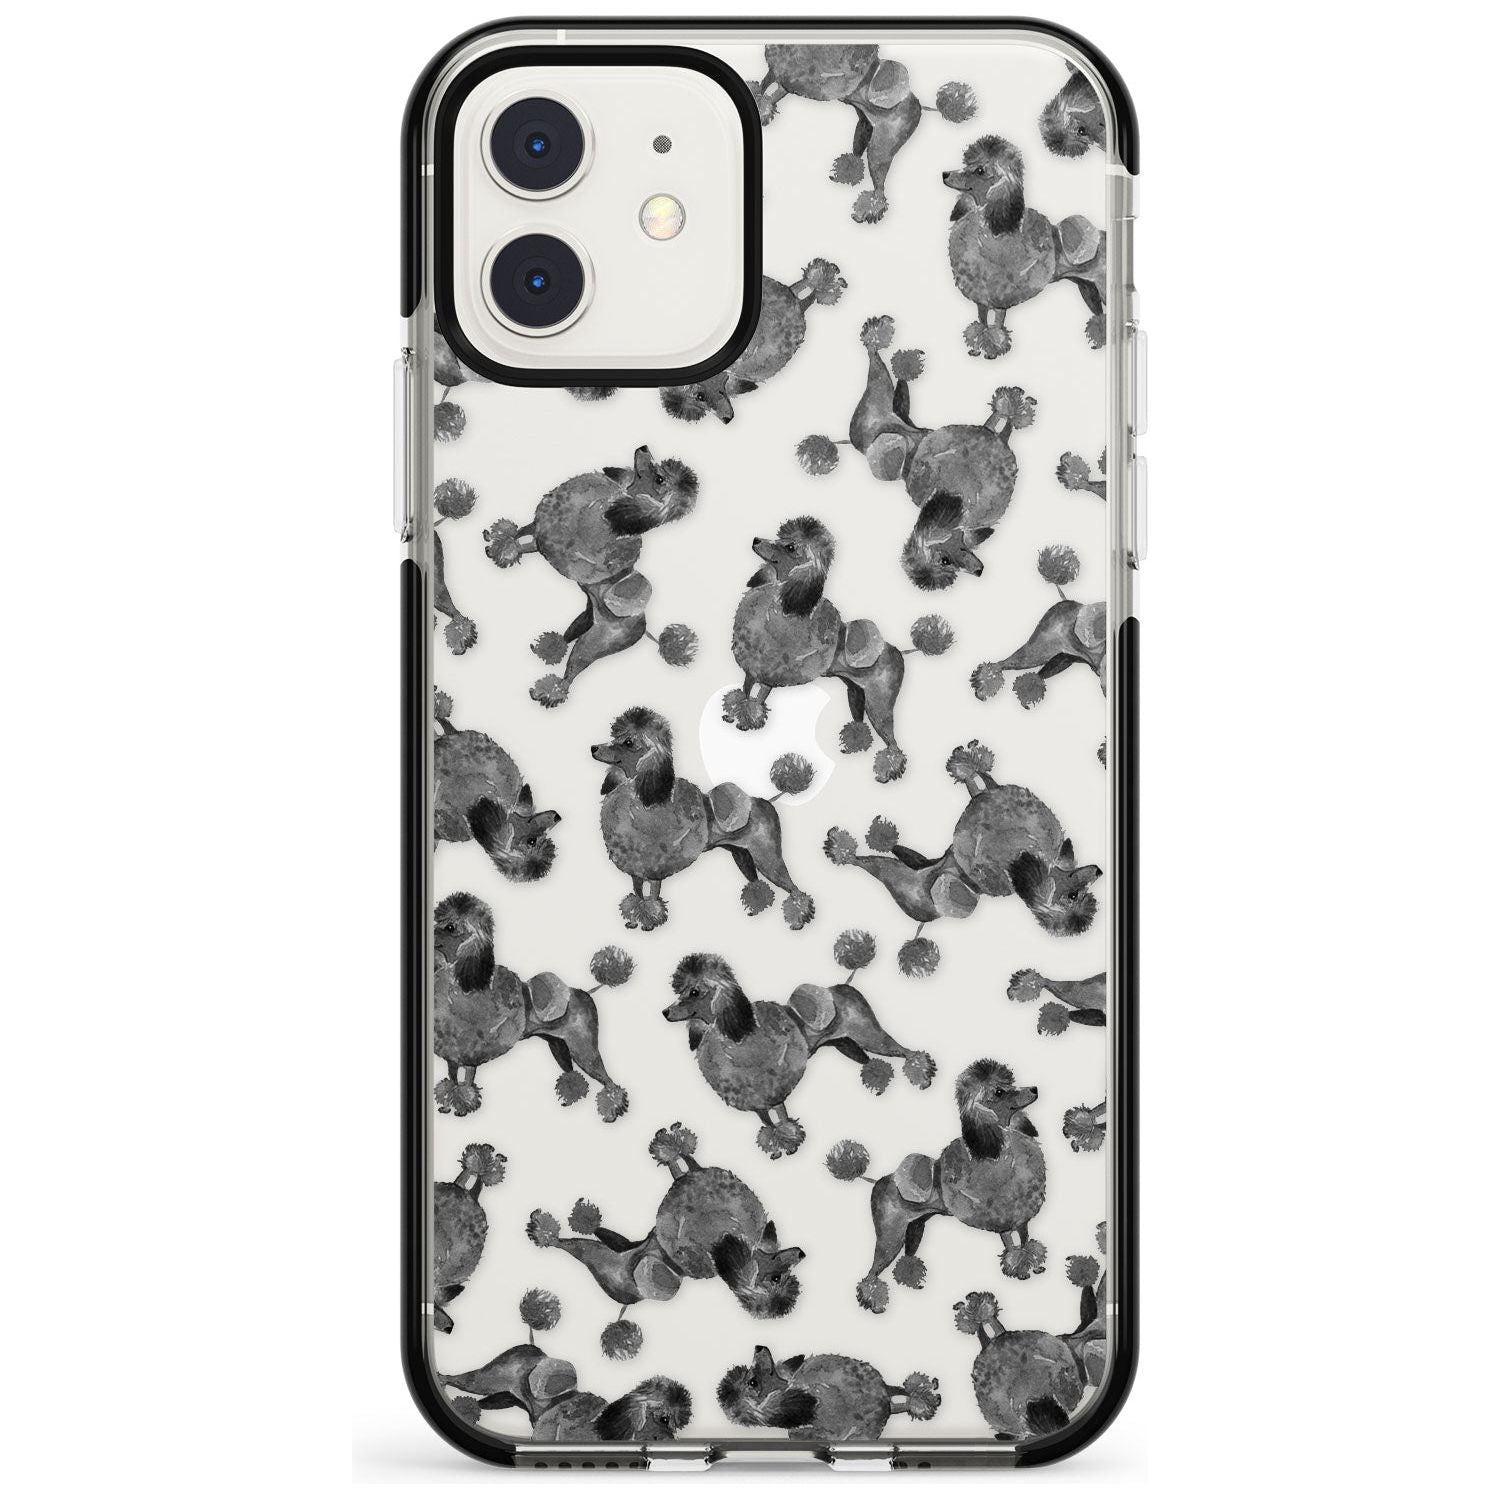 Poodle (Black) Watercolour Dog Pattern Black Impact Phone Case for iPhone 11